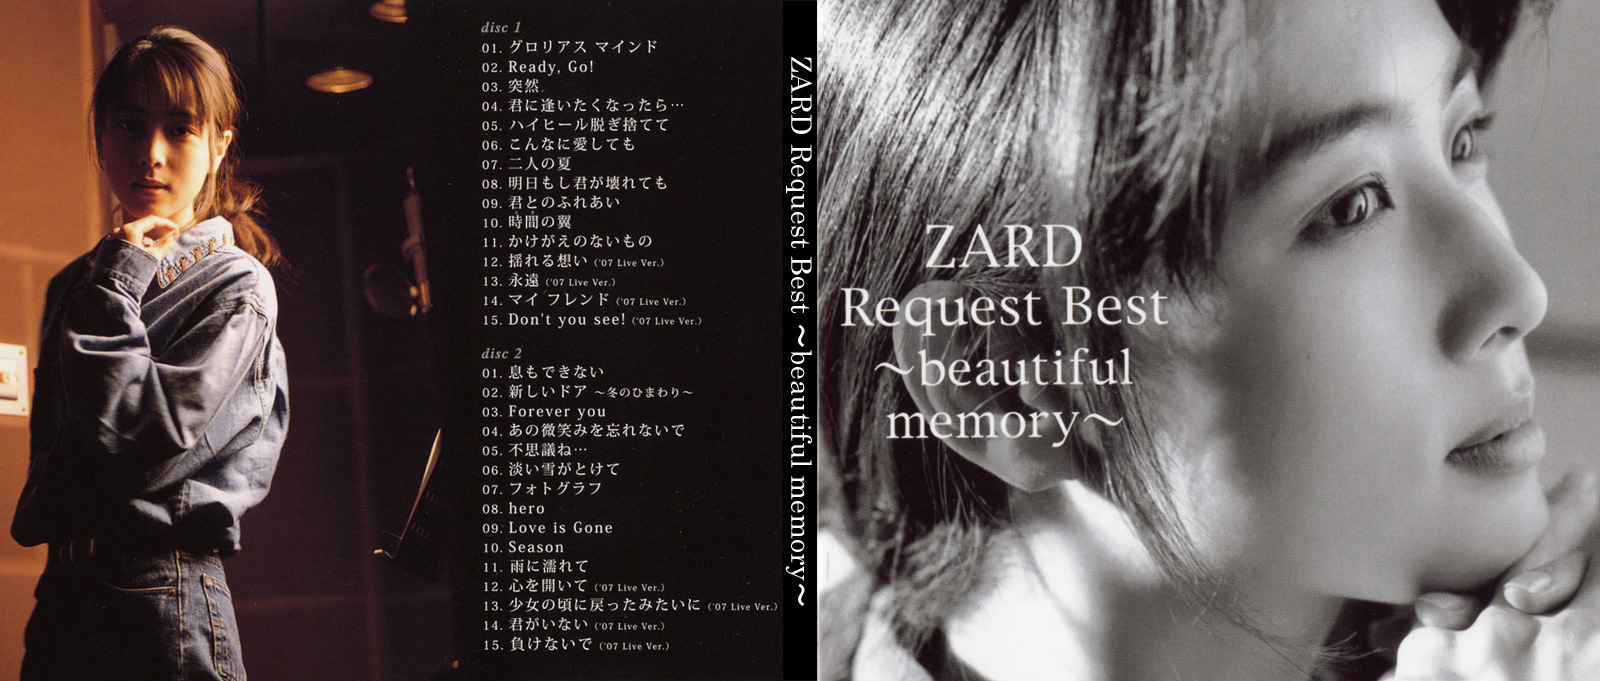 ZARD Request Best ～beautiful memory～ | tanapapa 自作ラベル保管庫